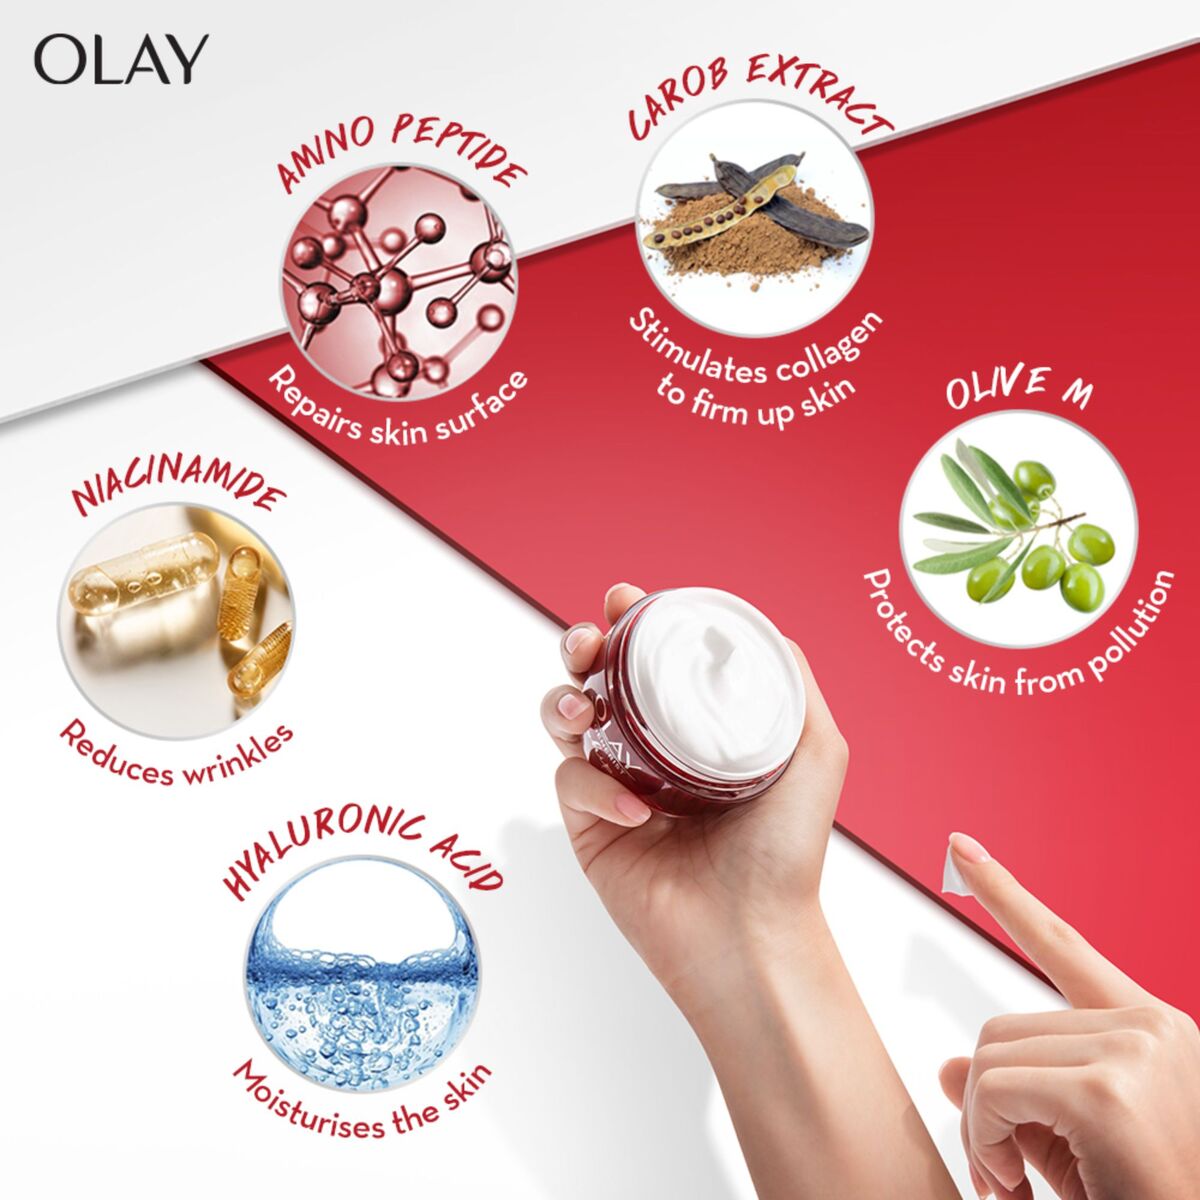 Olay Face Moisturizer Regenerist Regenerating Day Cream 50g